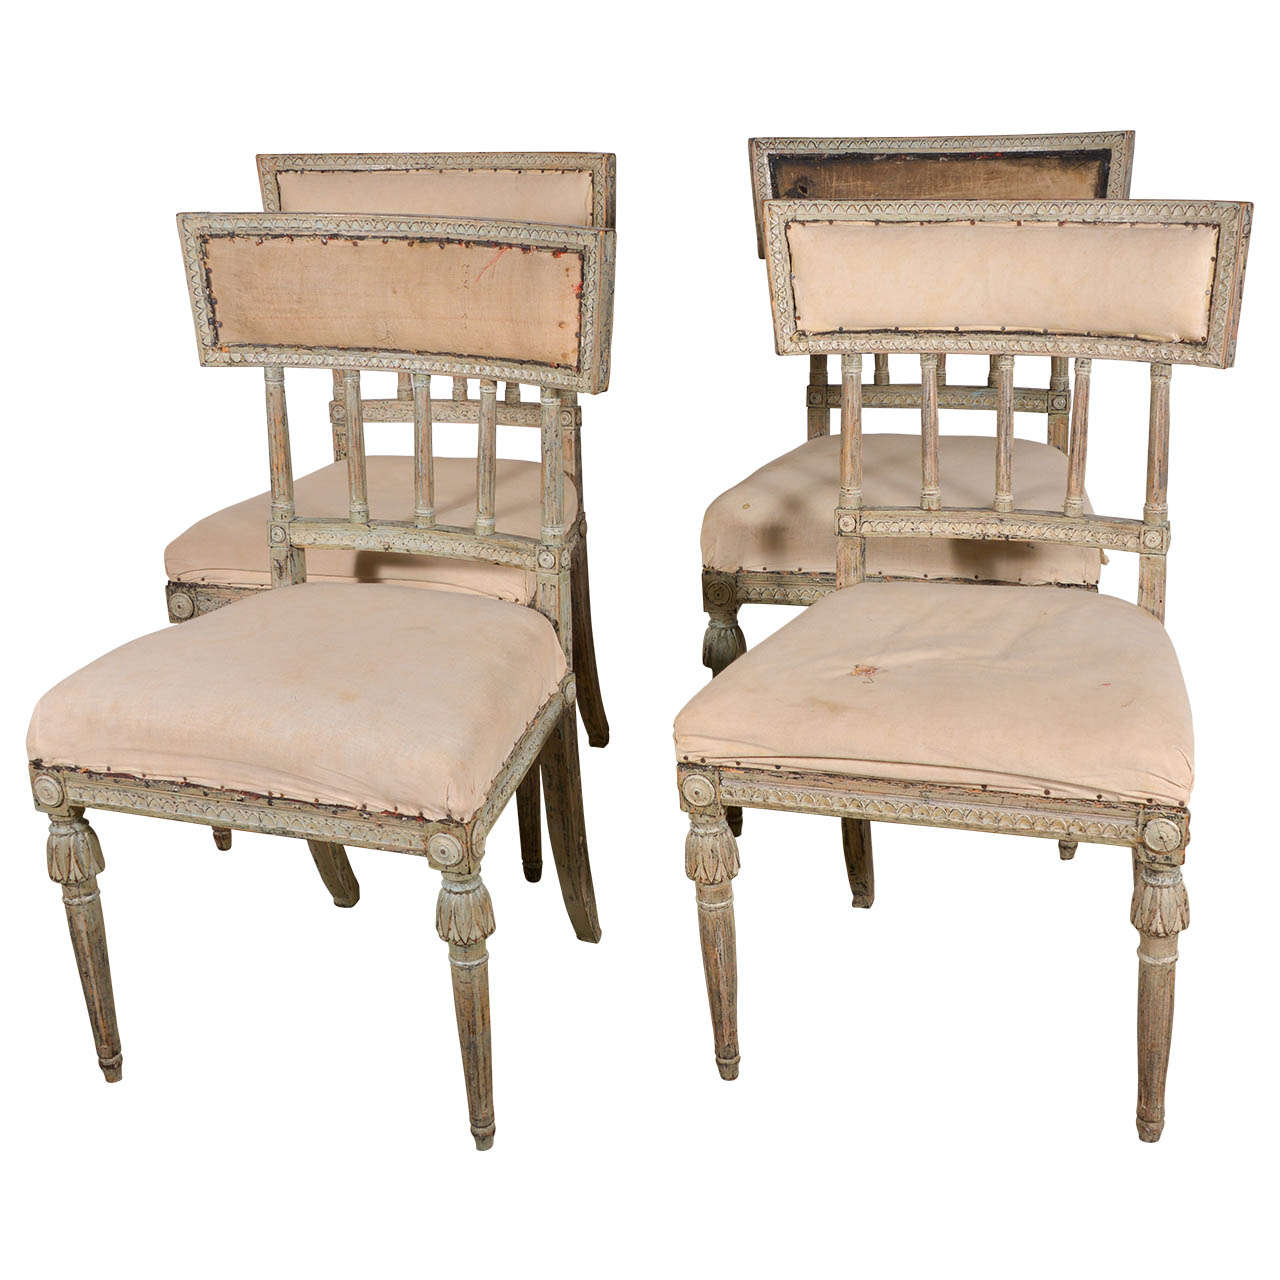 Swedish Gustavian DIning chairs